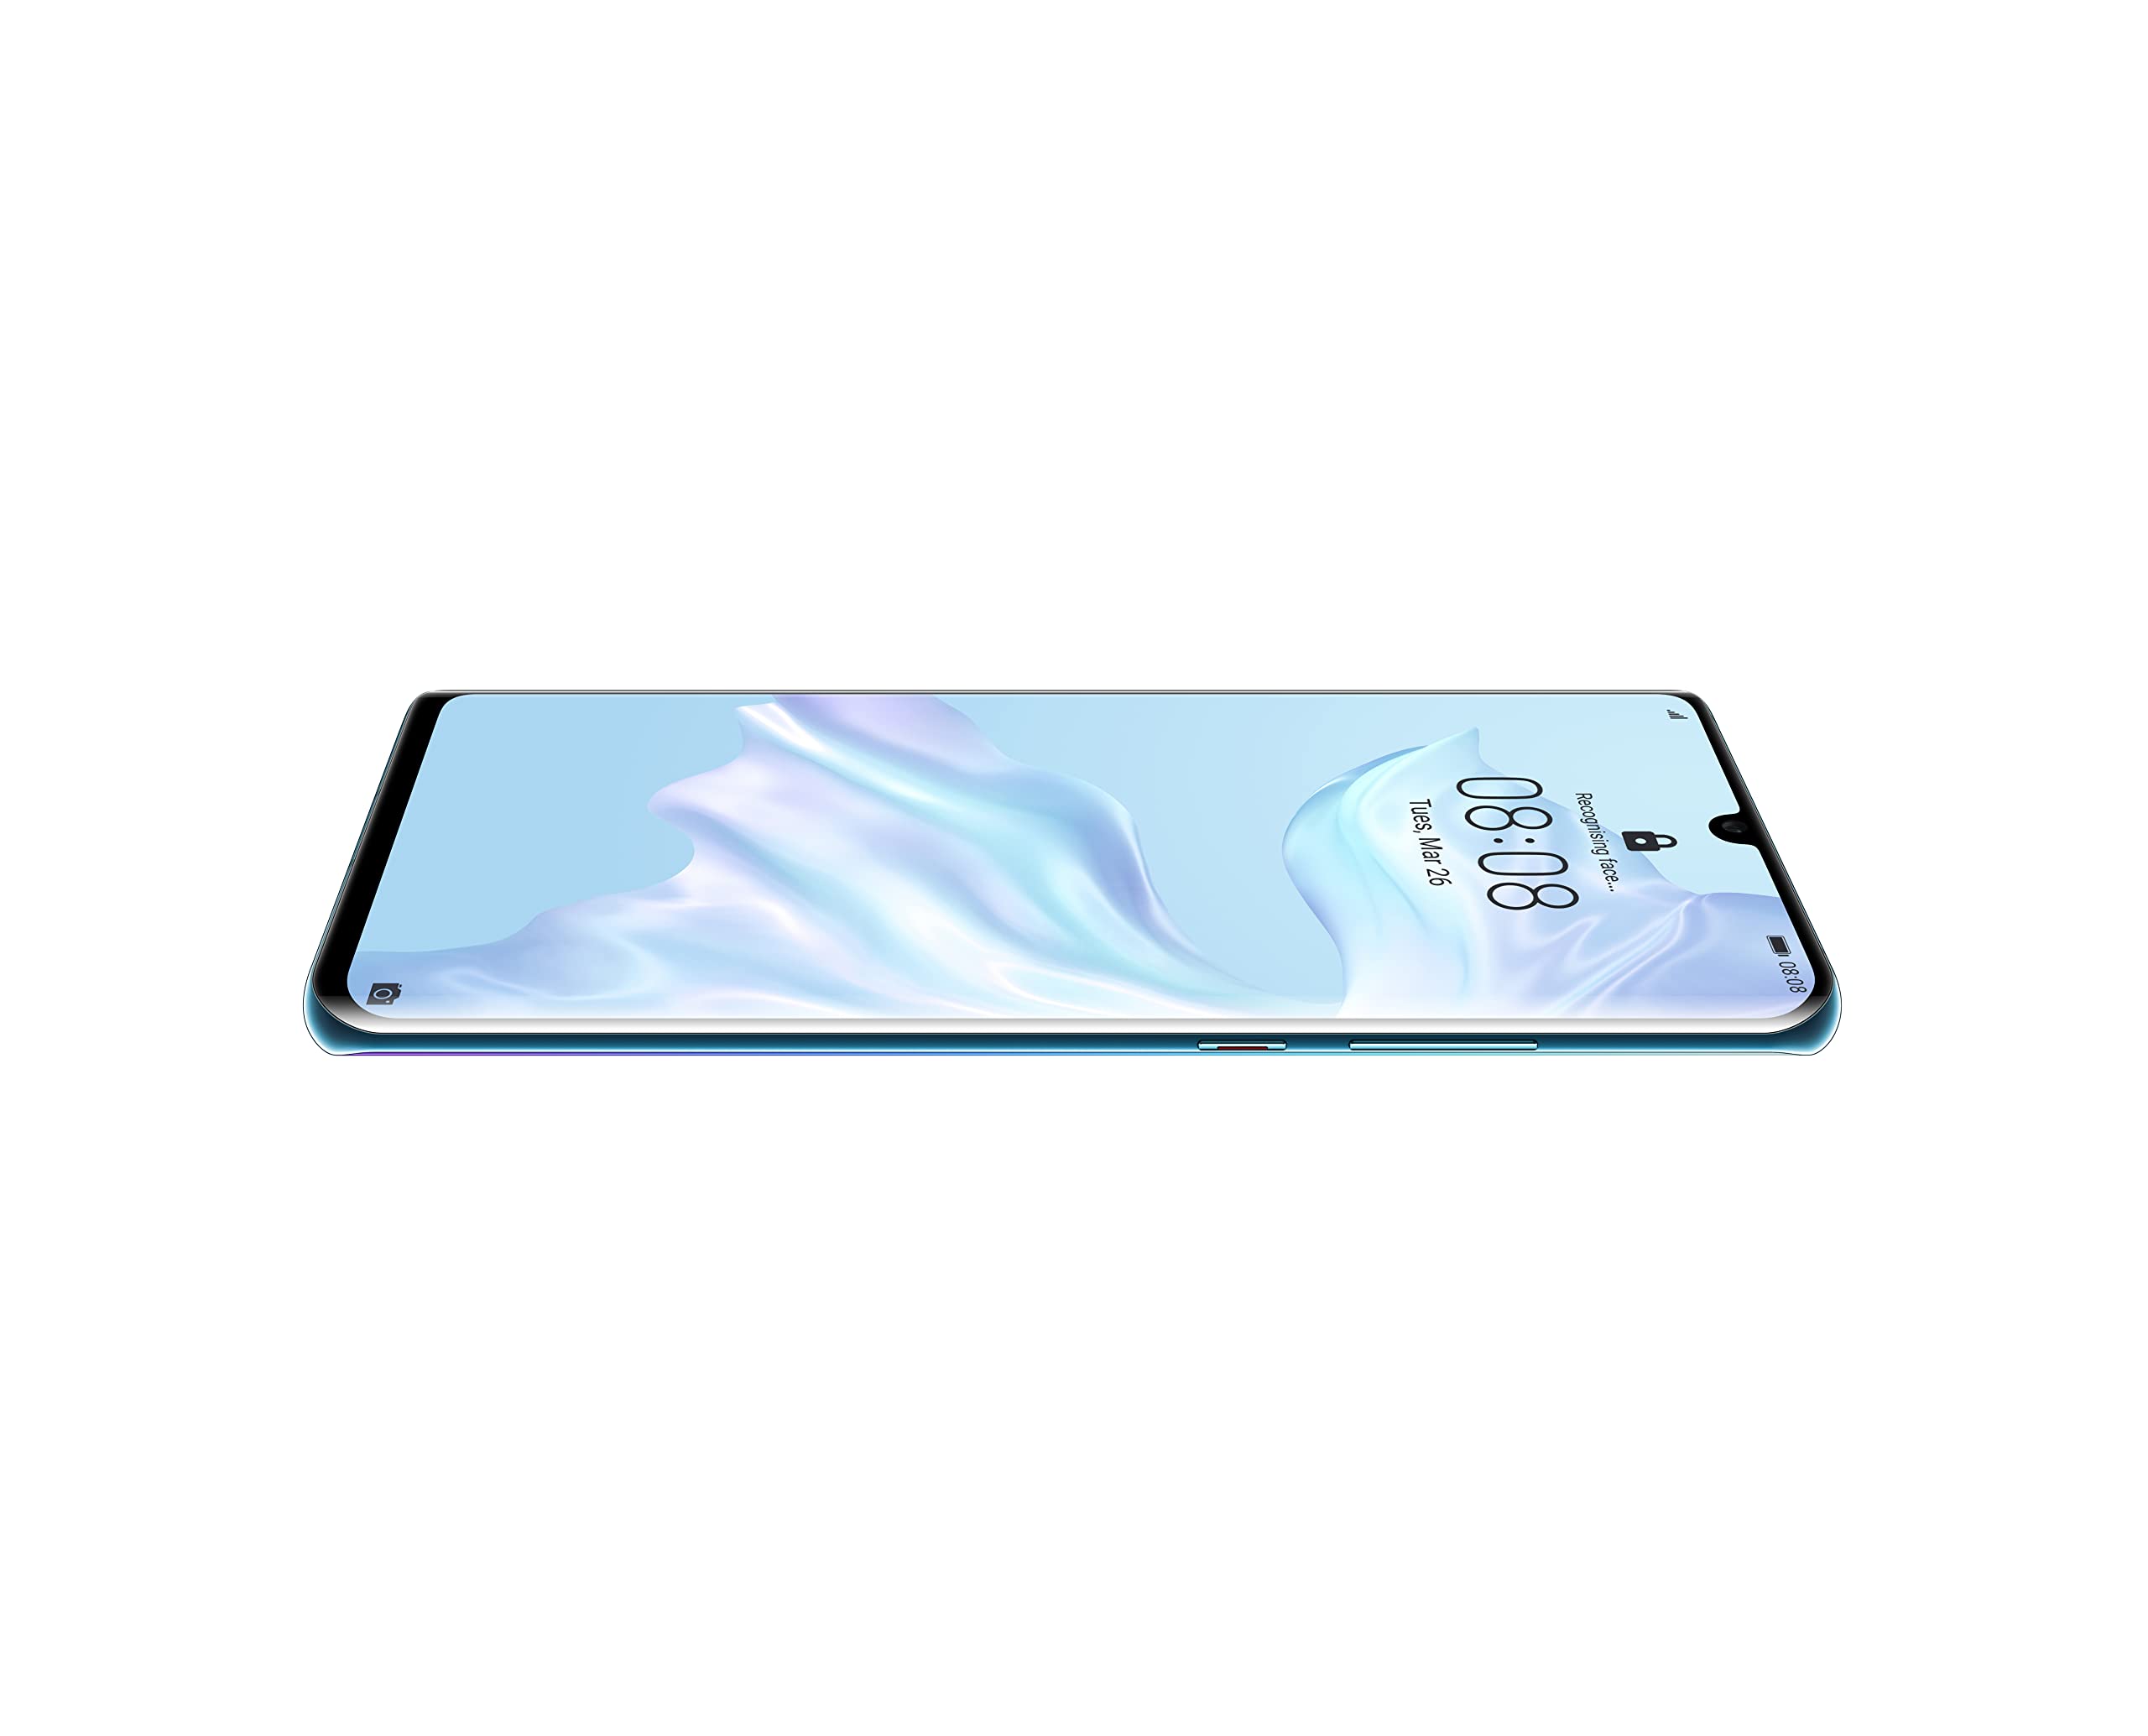 Huawei P30 Pro 256 GB Dual/Hybrid-SIM 4G Smartphone (Crystal)